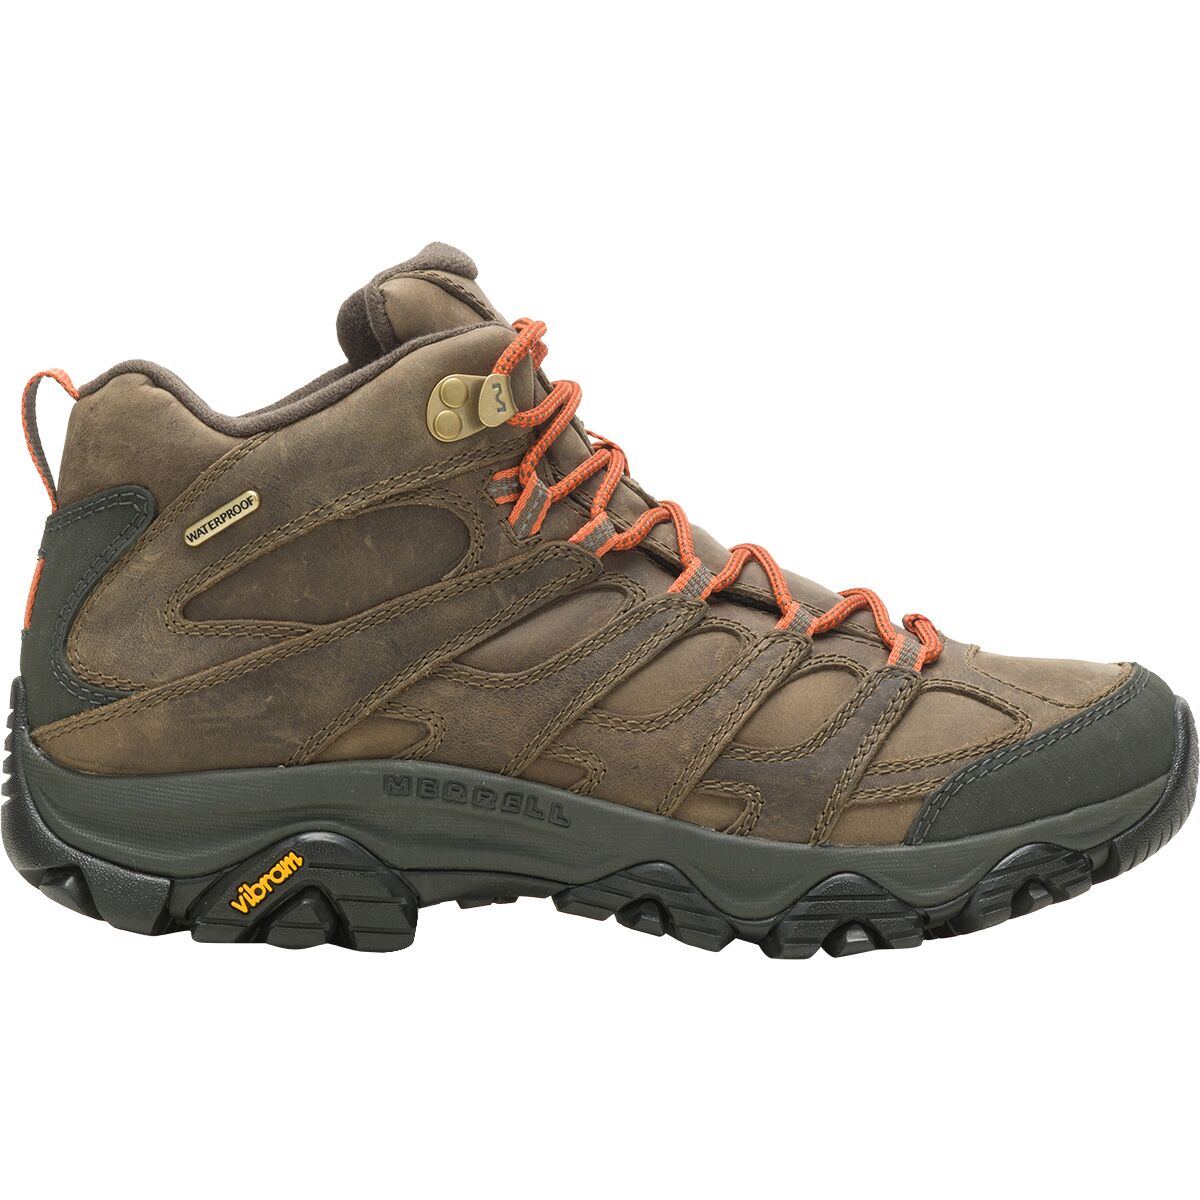 Merrell Moab 3 Prime Mid WP Hiking Boot - Wide - Men's